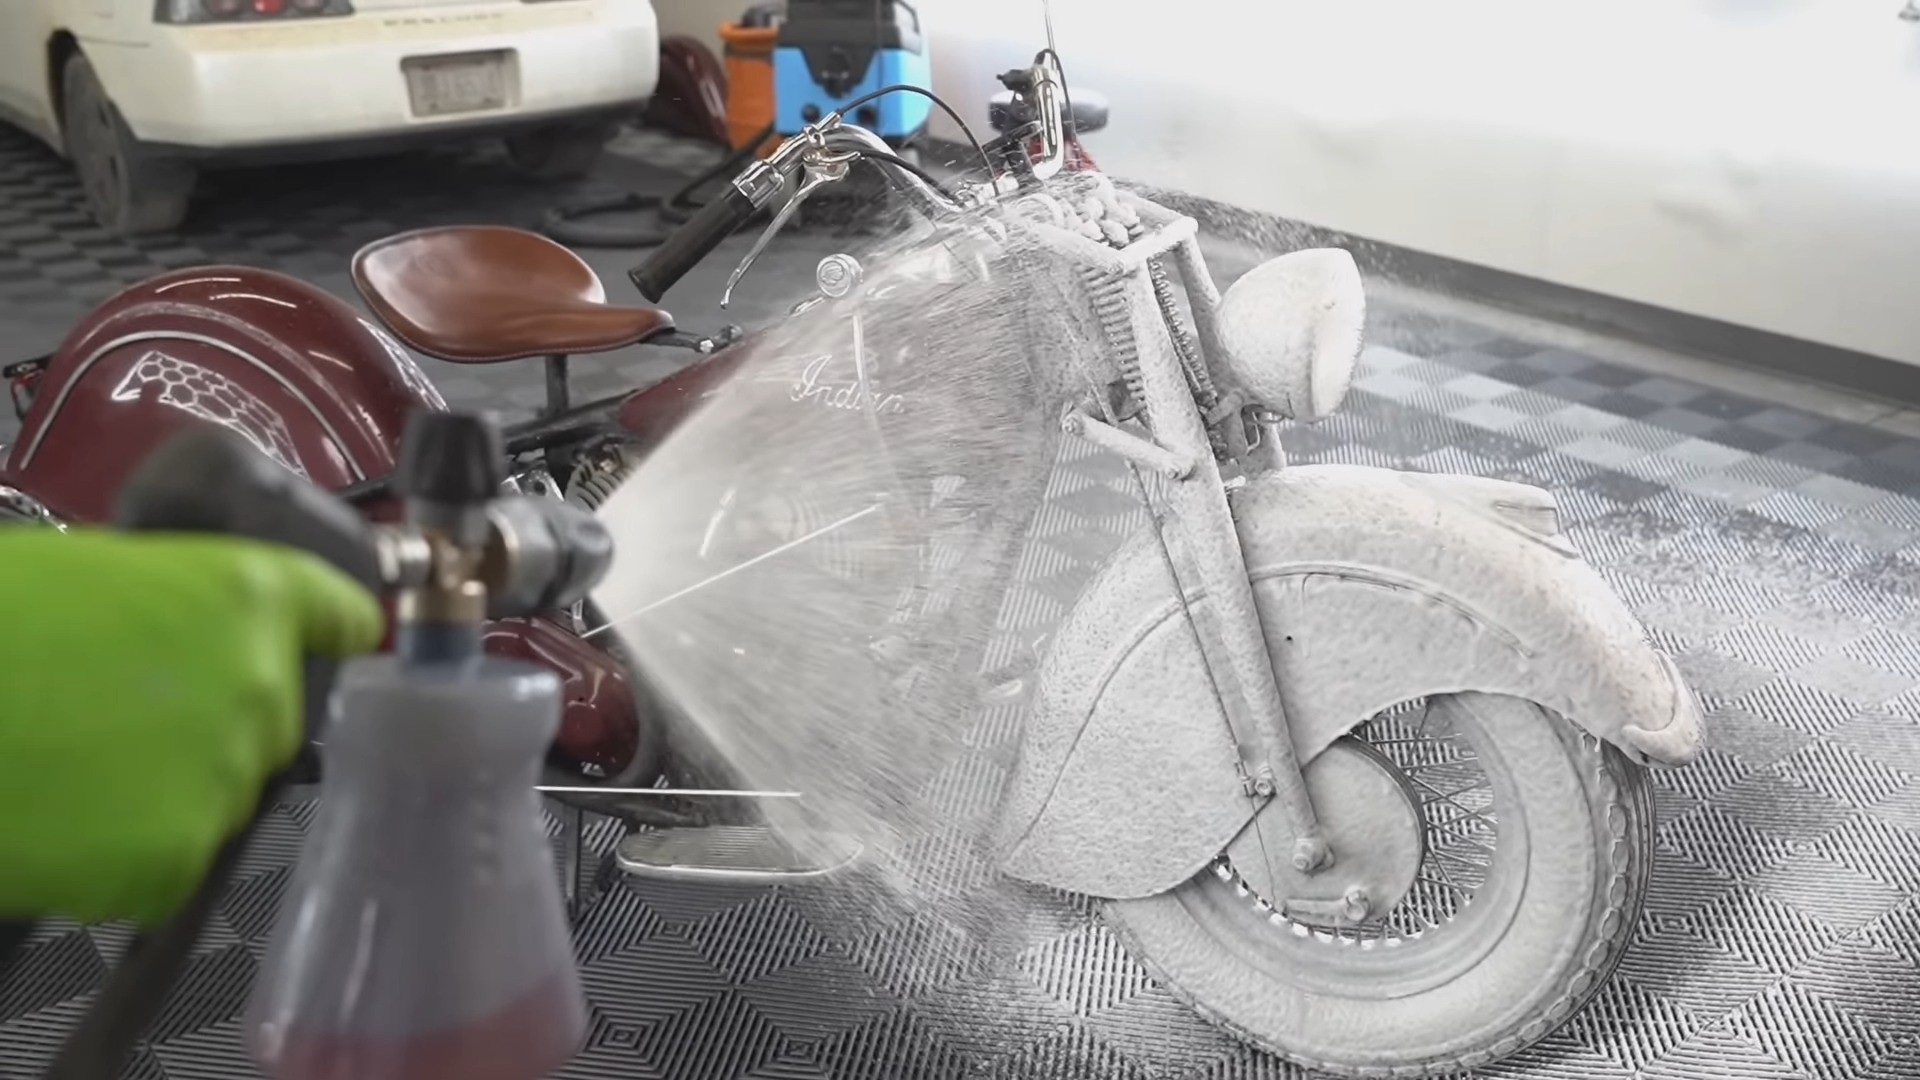 5000 Original Miles: ABANDONED 1947 Indian Motorcycle